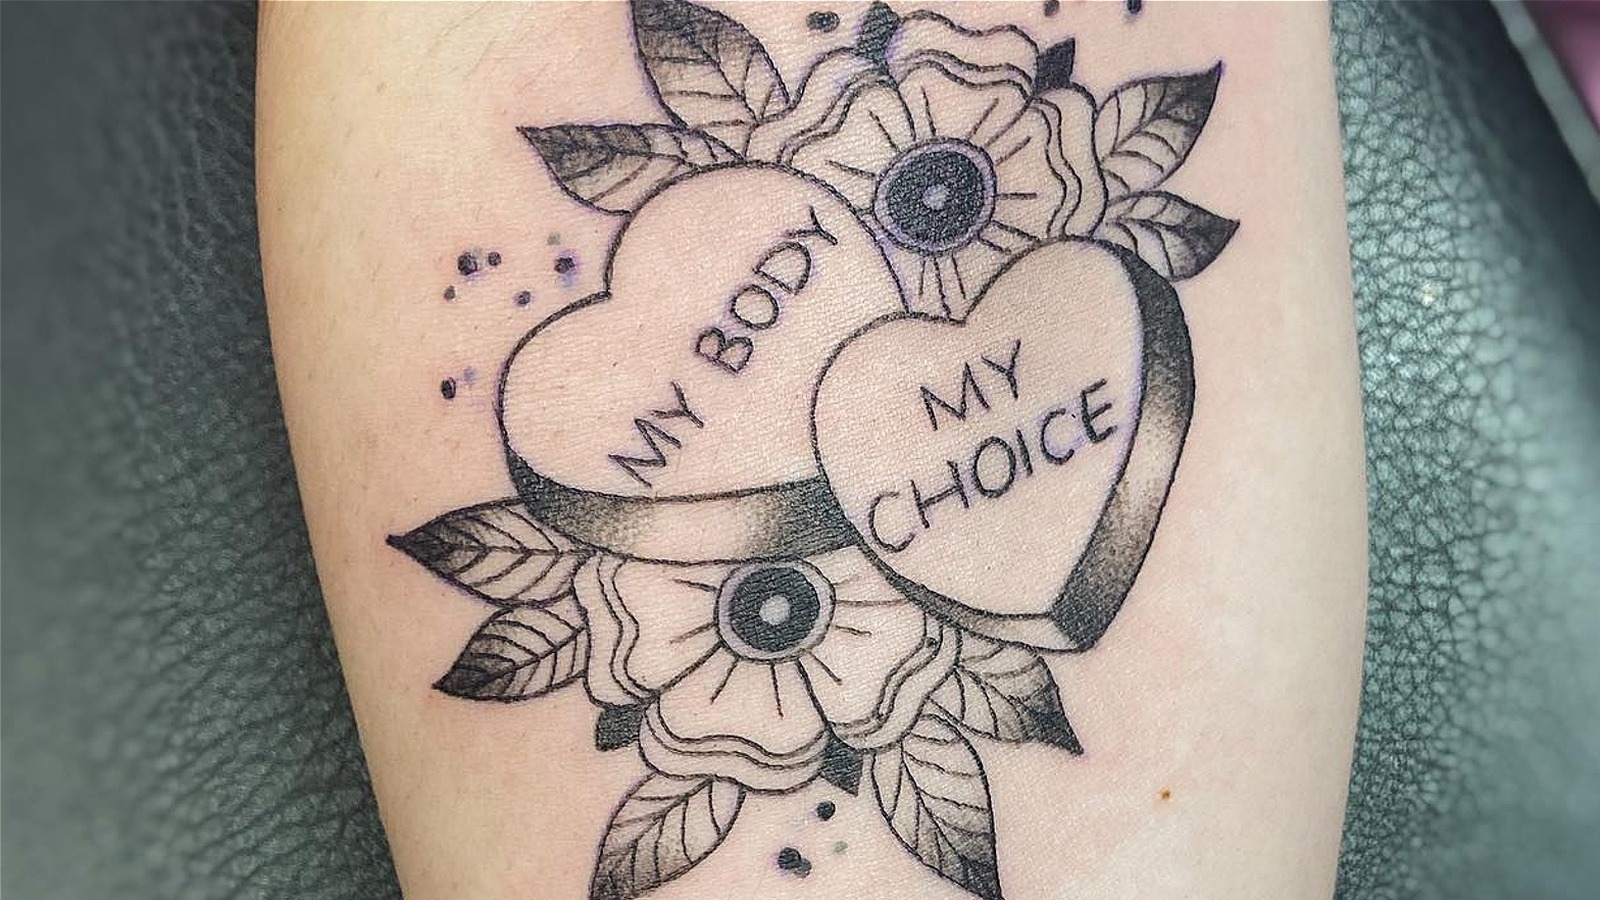 Crystal Gemstone Owl Waterproof Temporary Tattoo Sticker Heart Shaped Clock  Rose Flash Arm Tattoos Body Art Fake Tatoo   AliExpress Mobile